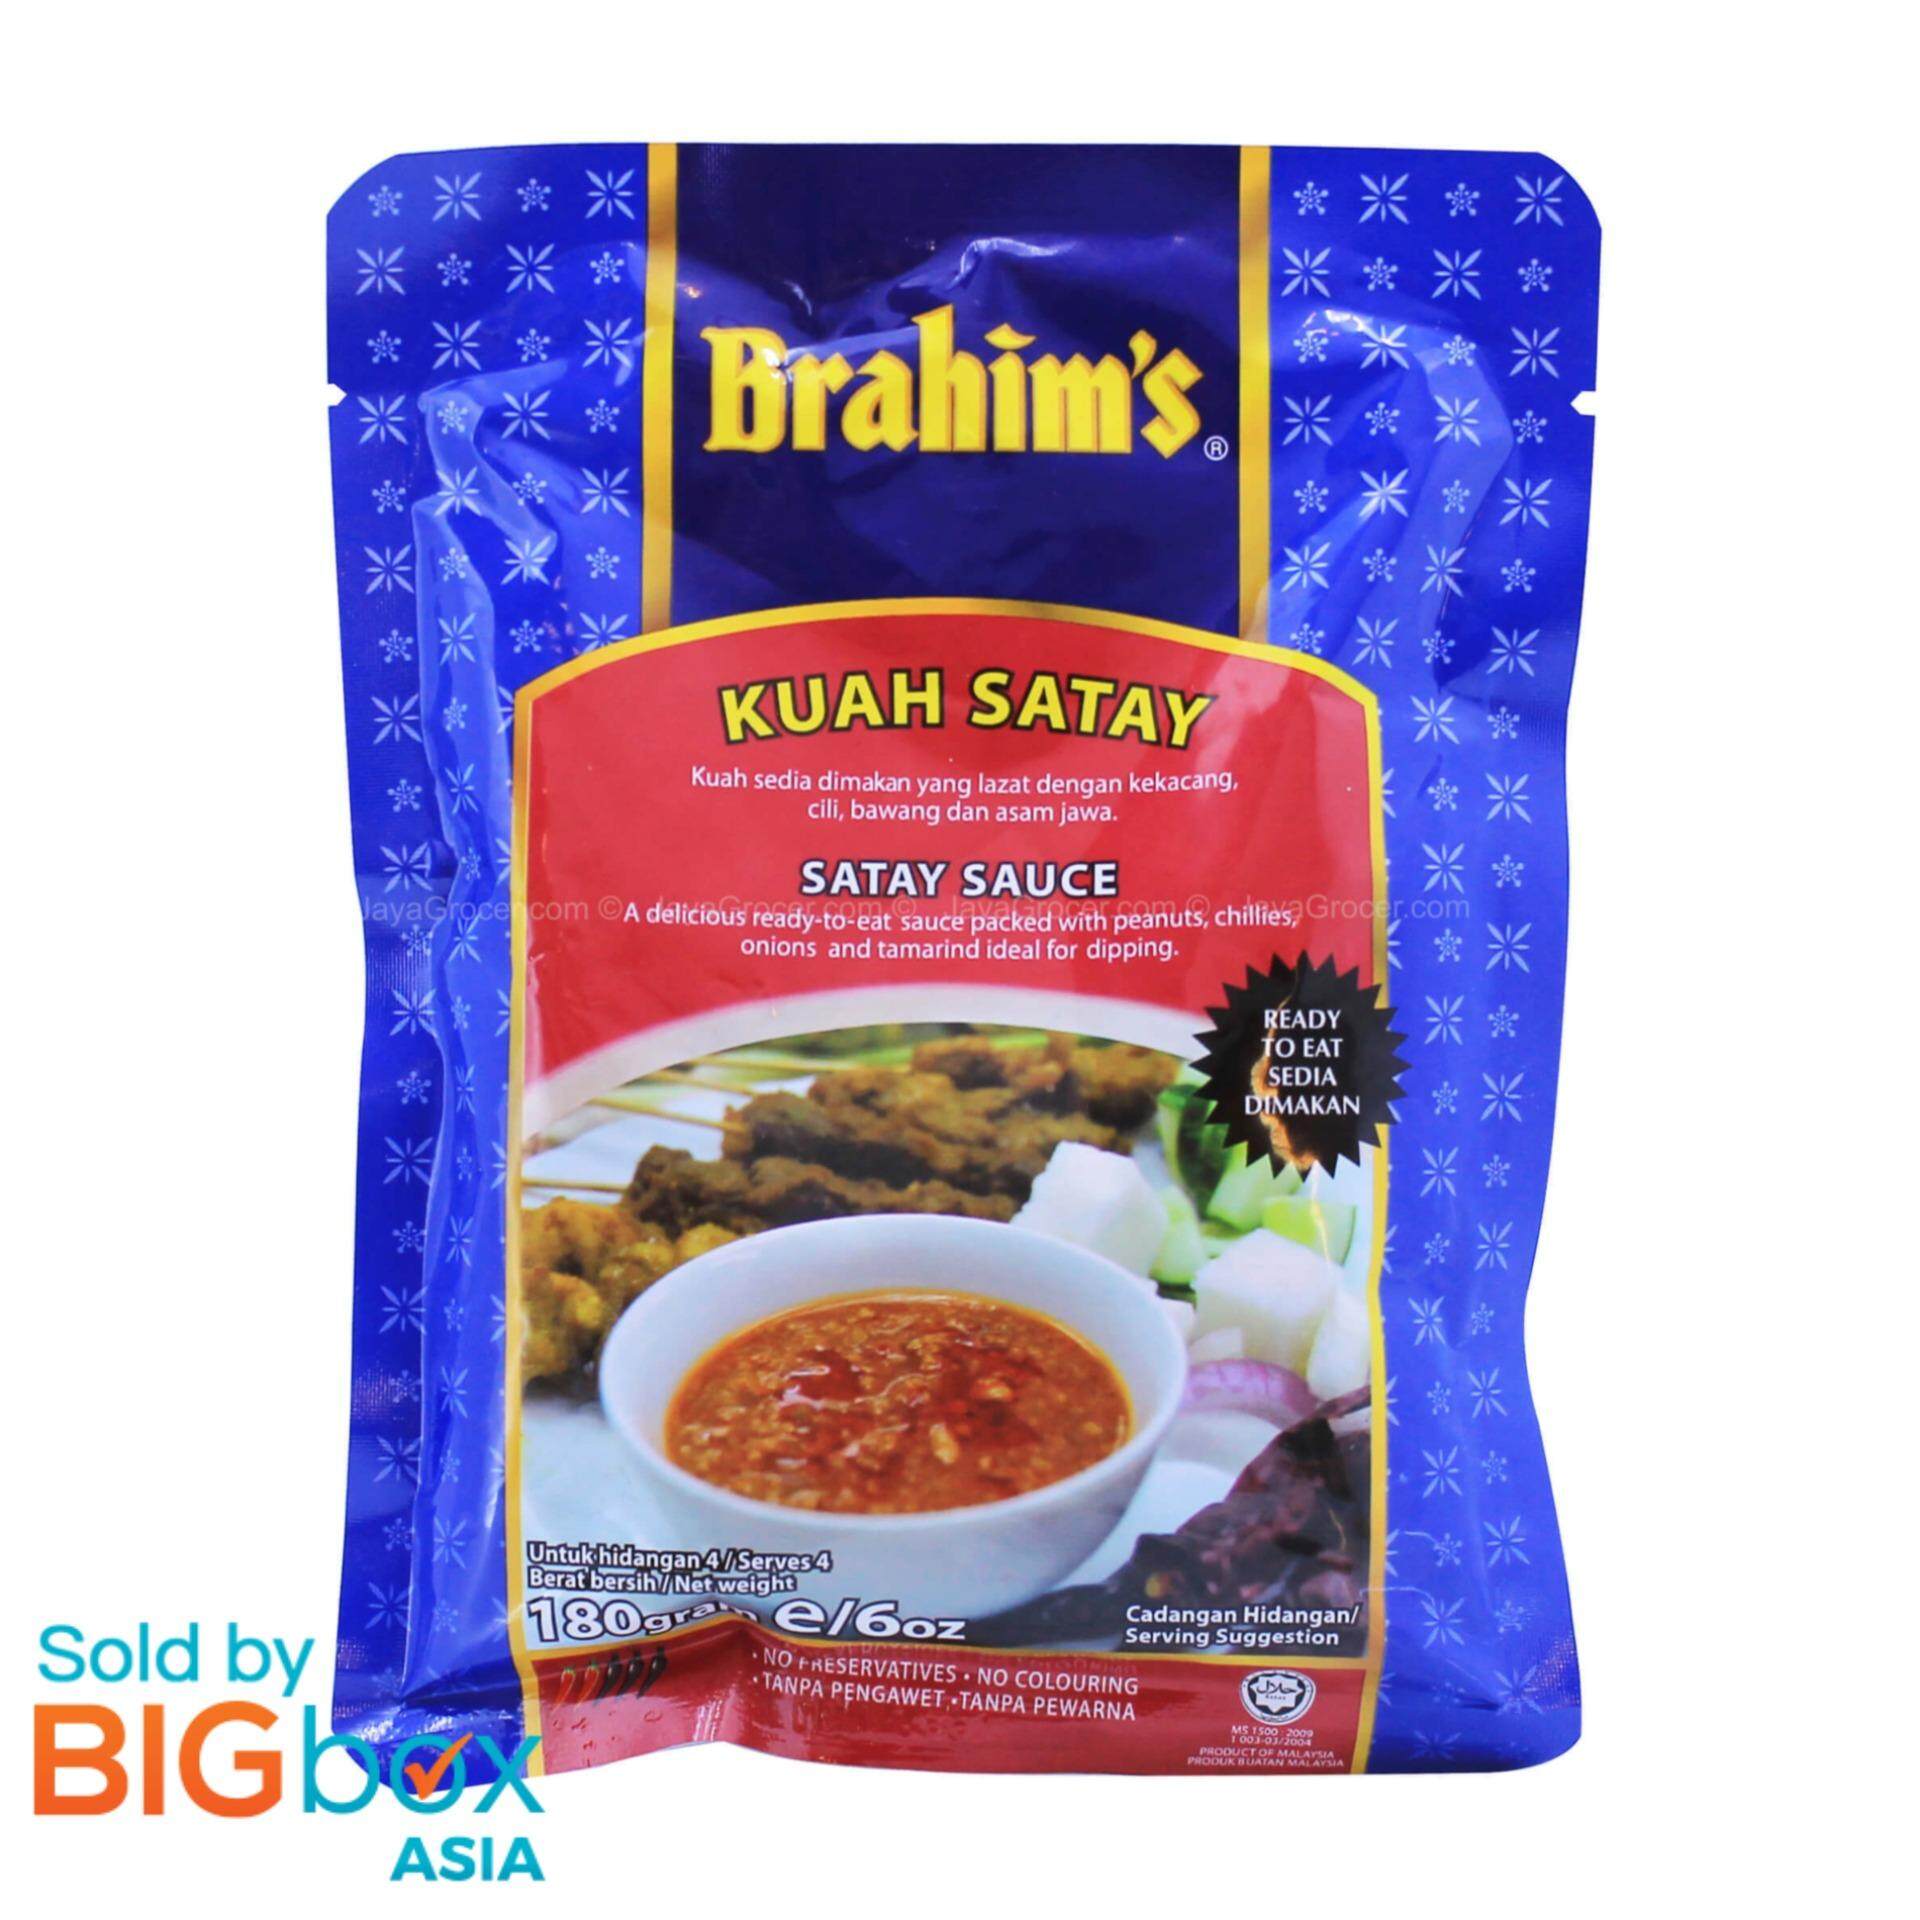 Brahim's Ready To Use Sauces 180g - Satay